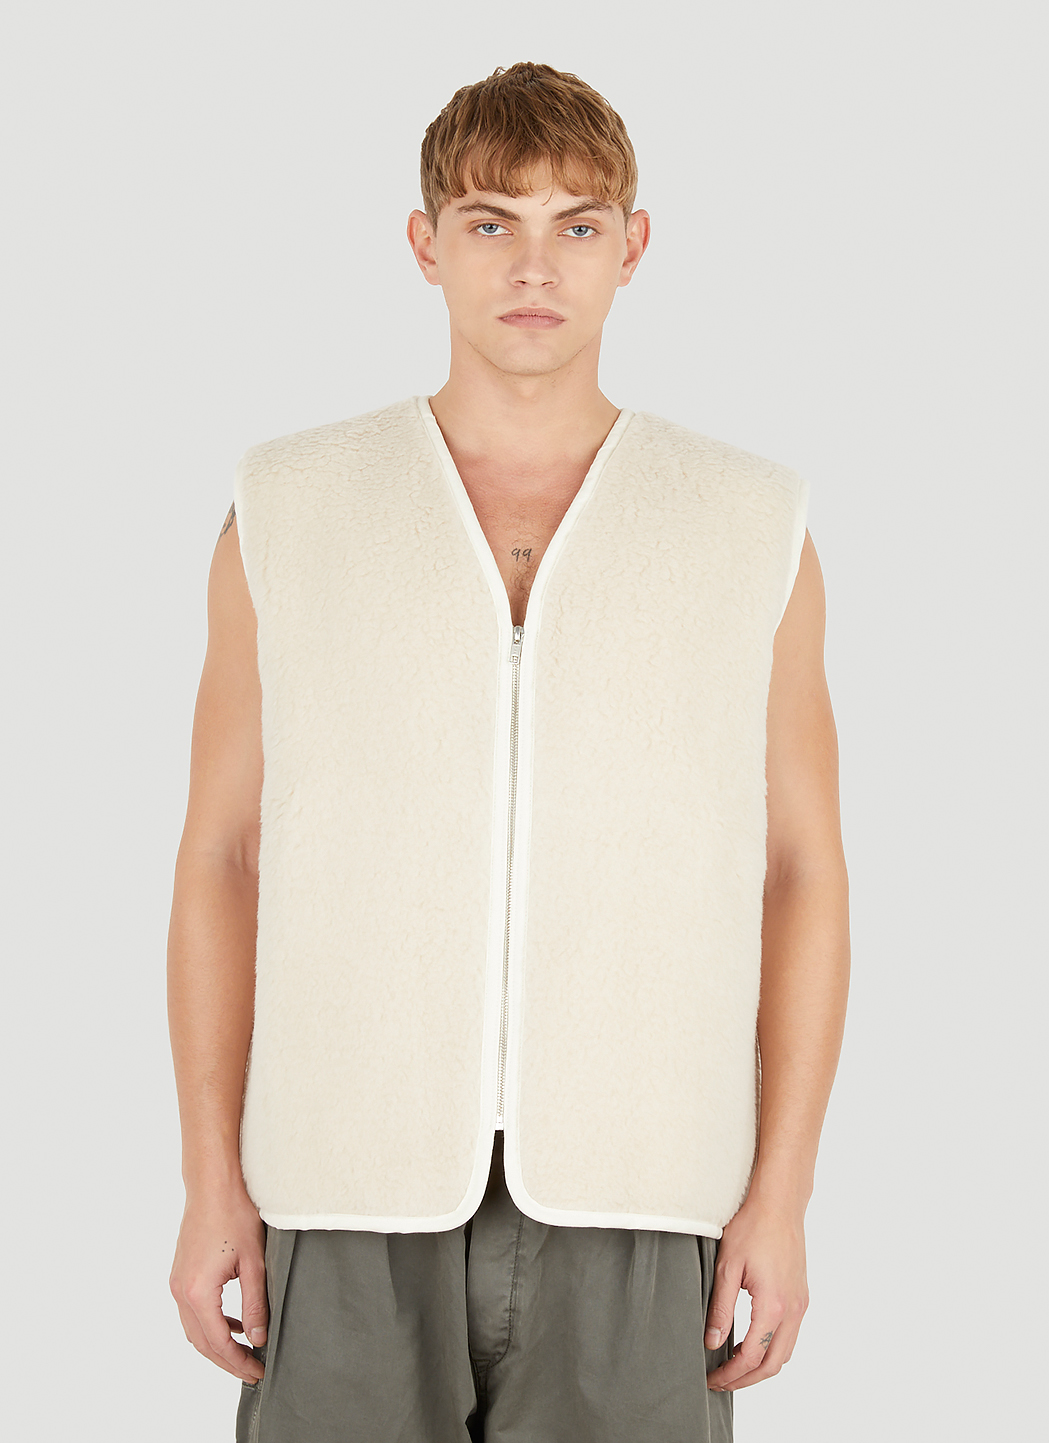 Camiel Fortgens Men's Fleece Gilet Jacket in White | LN-CC®